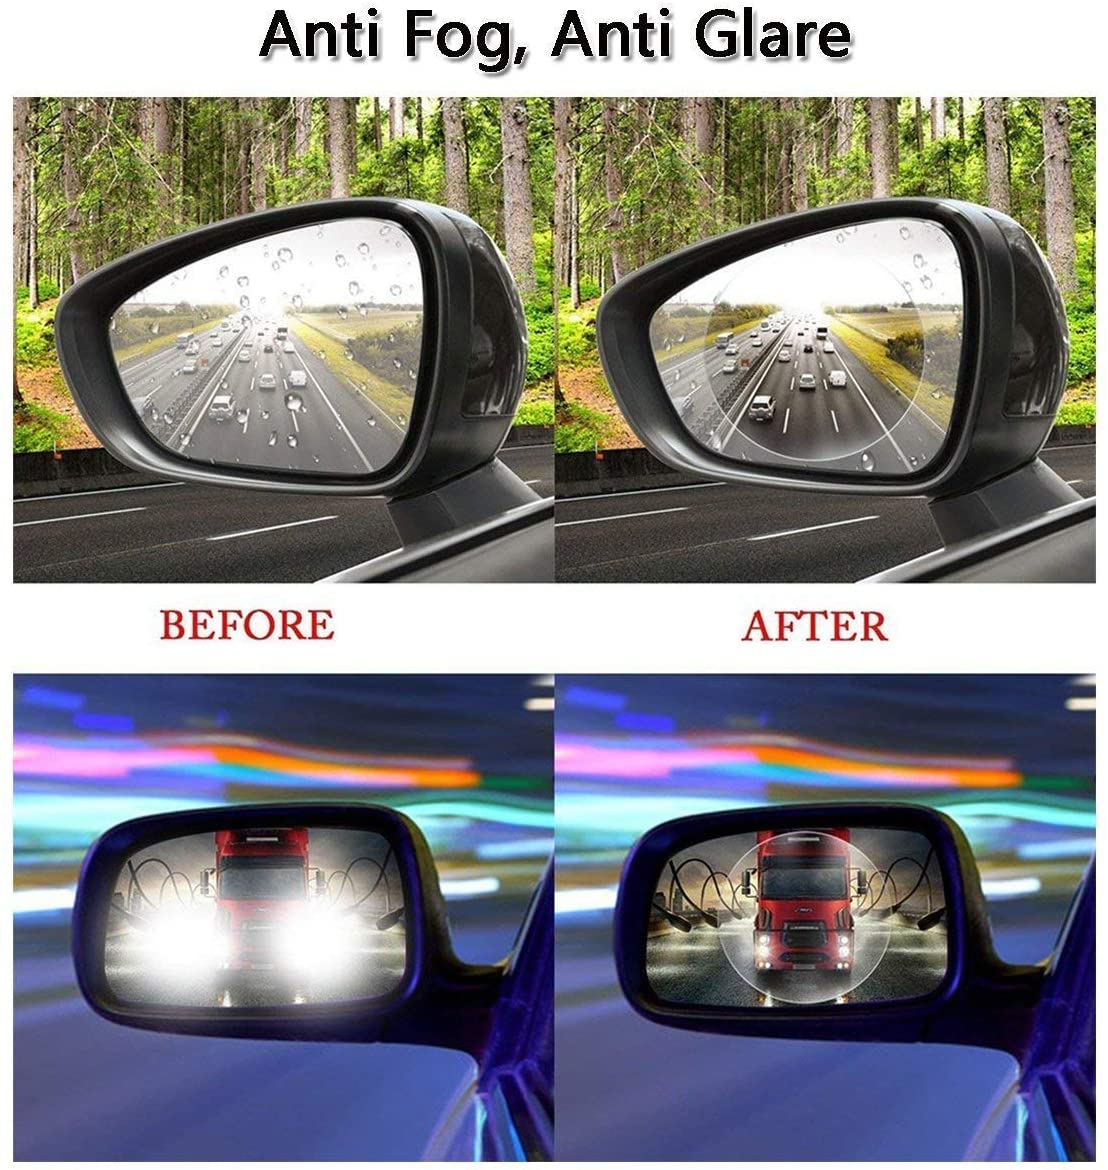 Details about   2pcs Car motorcycle rearview mirror anti-fog anti-glare waterproof film sticYRDE 